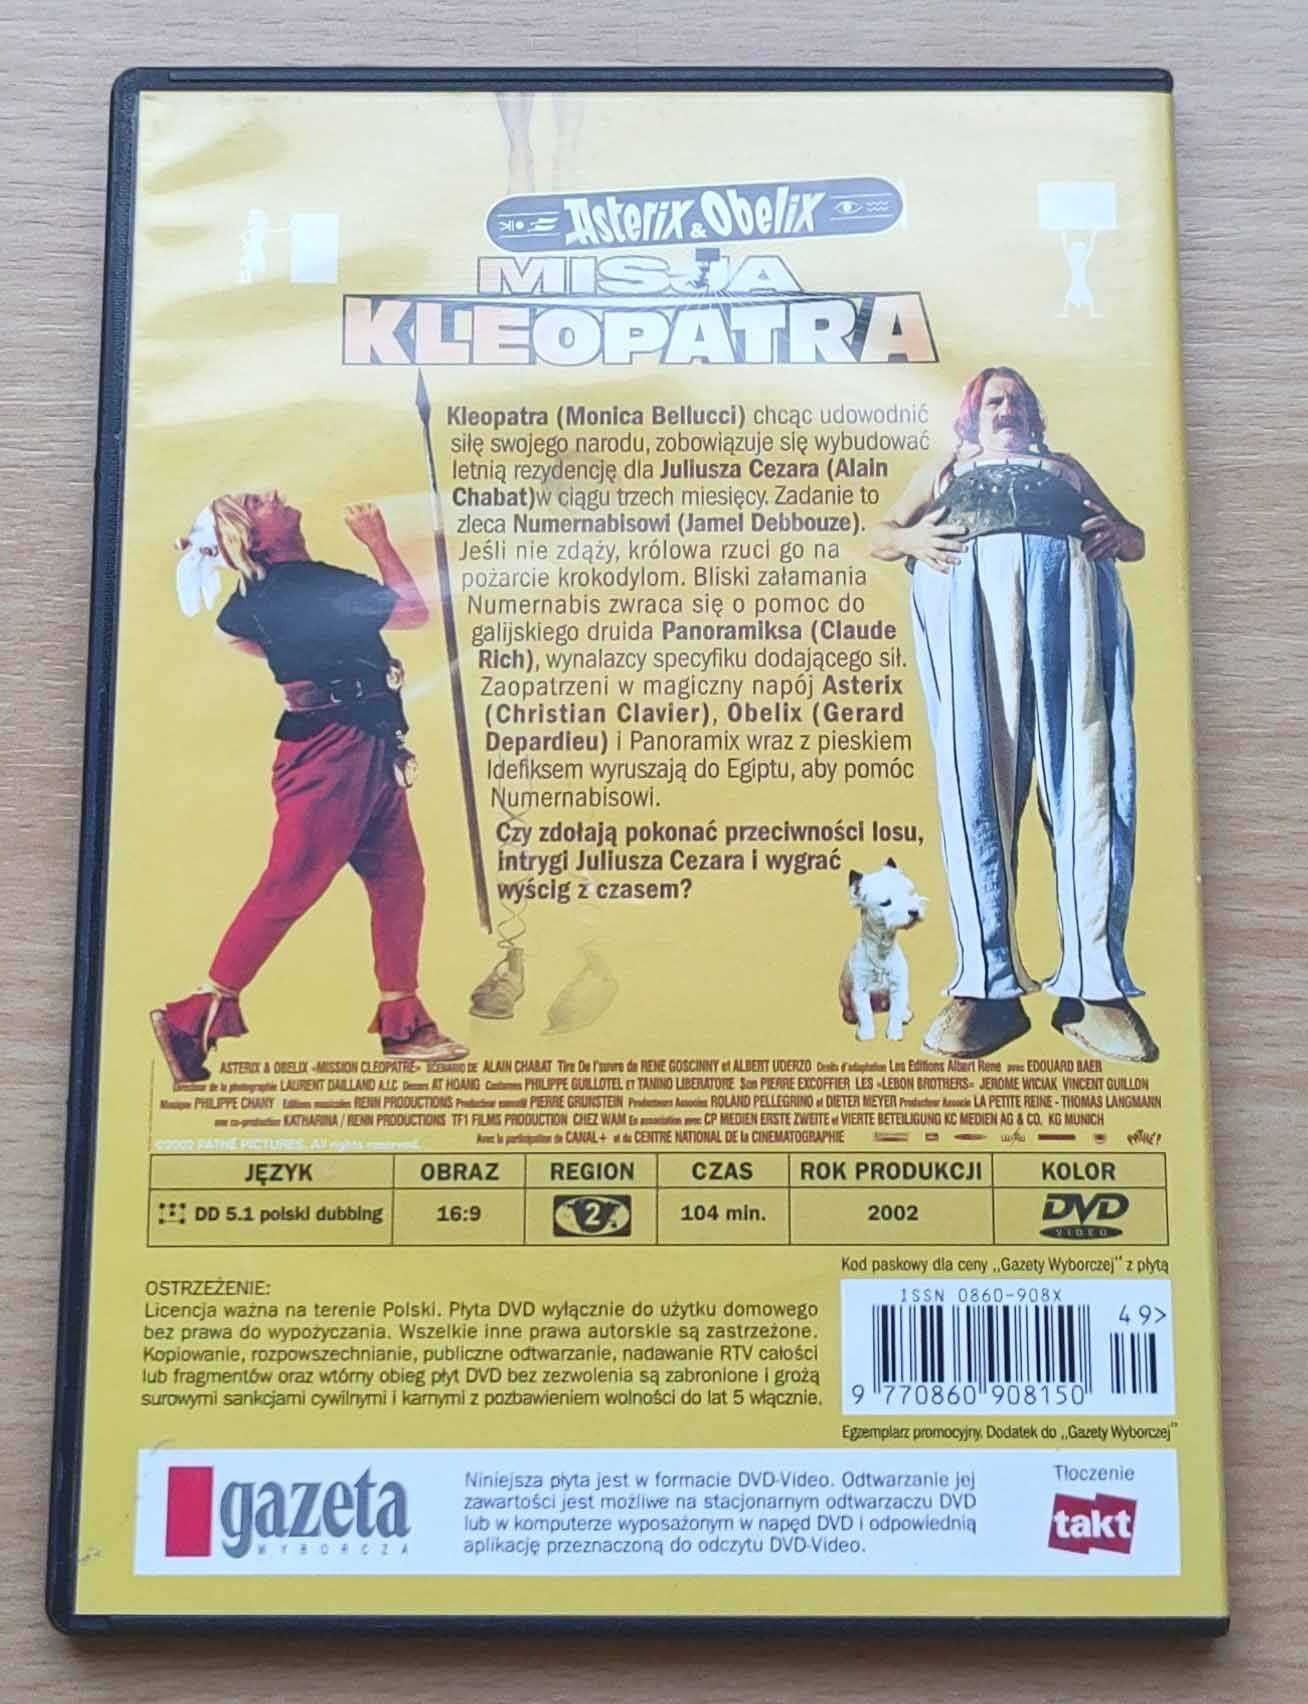 Asterix & Obelix Misja Kleopatra - film na płycie dvd - 2002r.